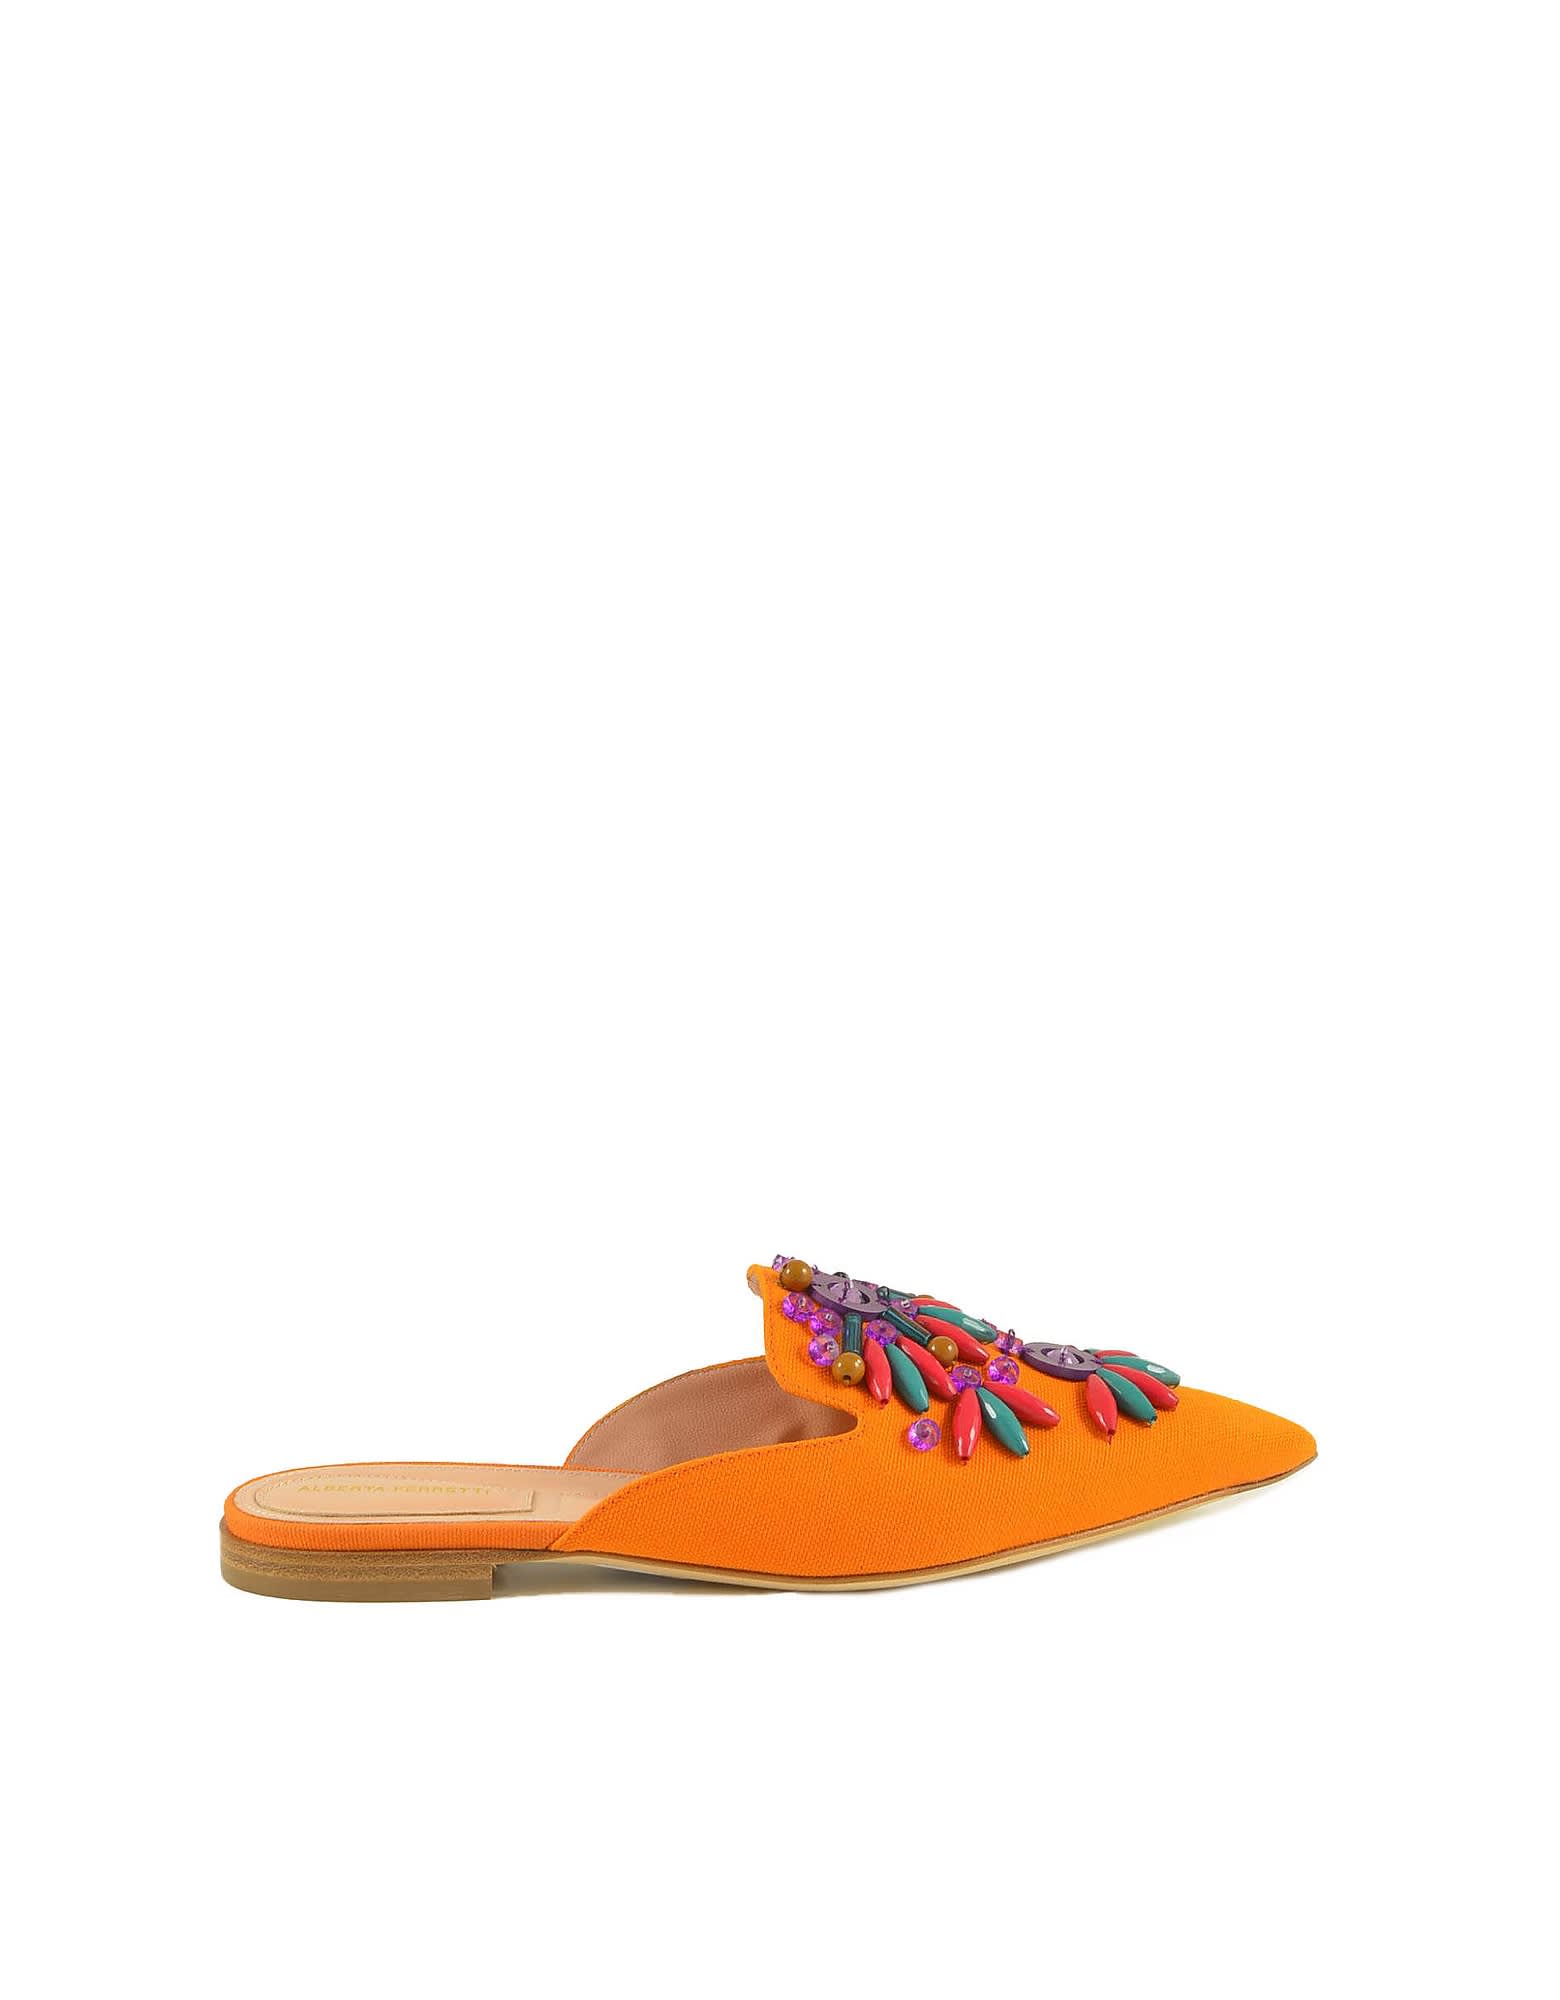 Alberta Ferretti Womens Orange Shoes